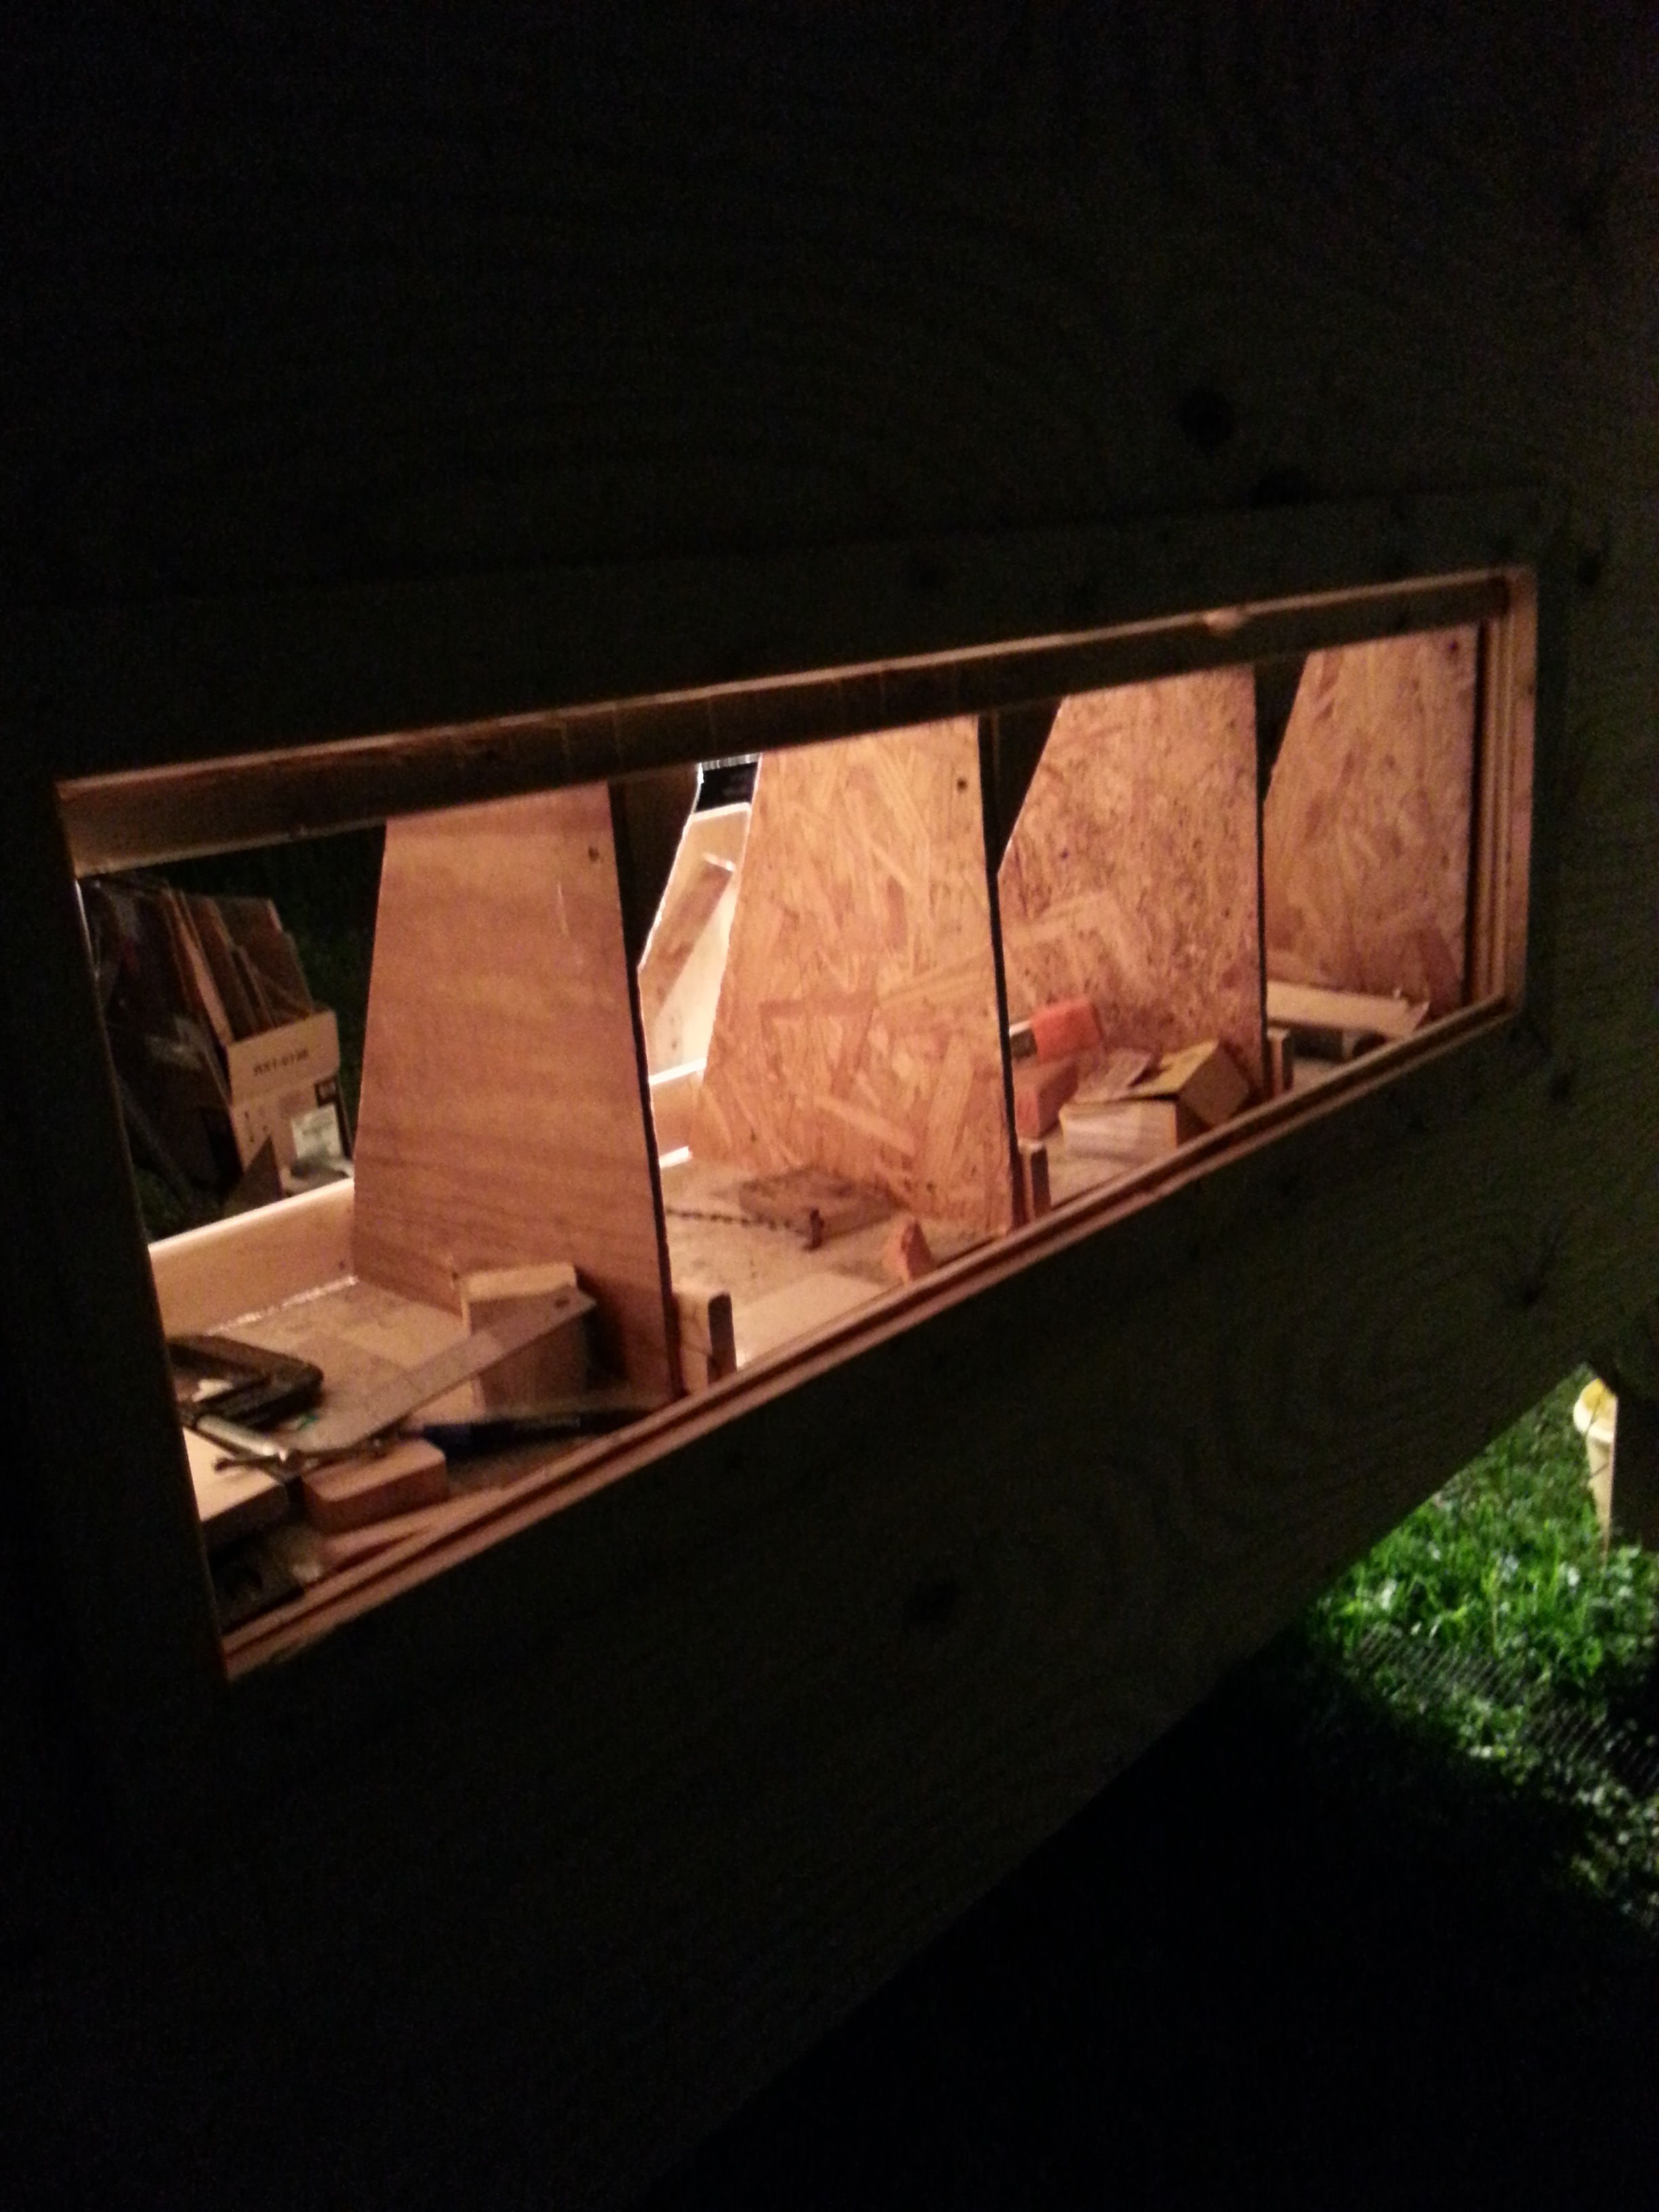 Same nesting boxes, lit up.